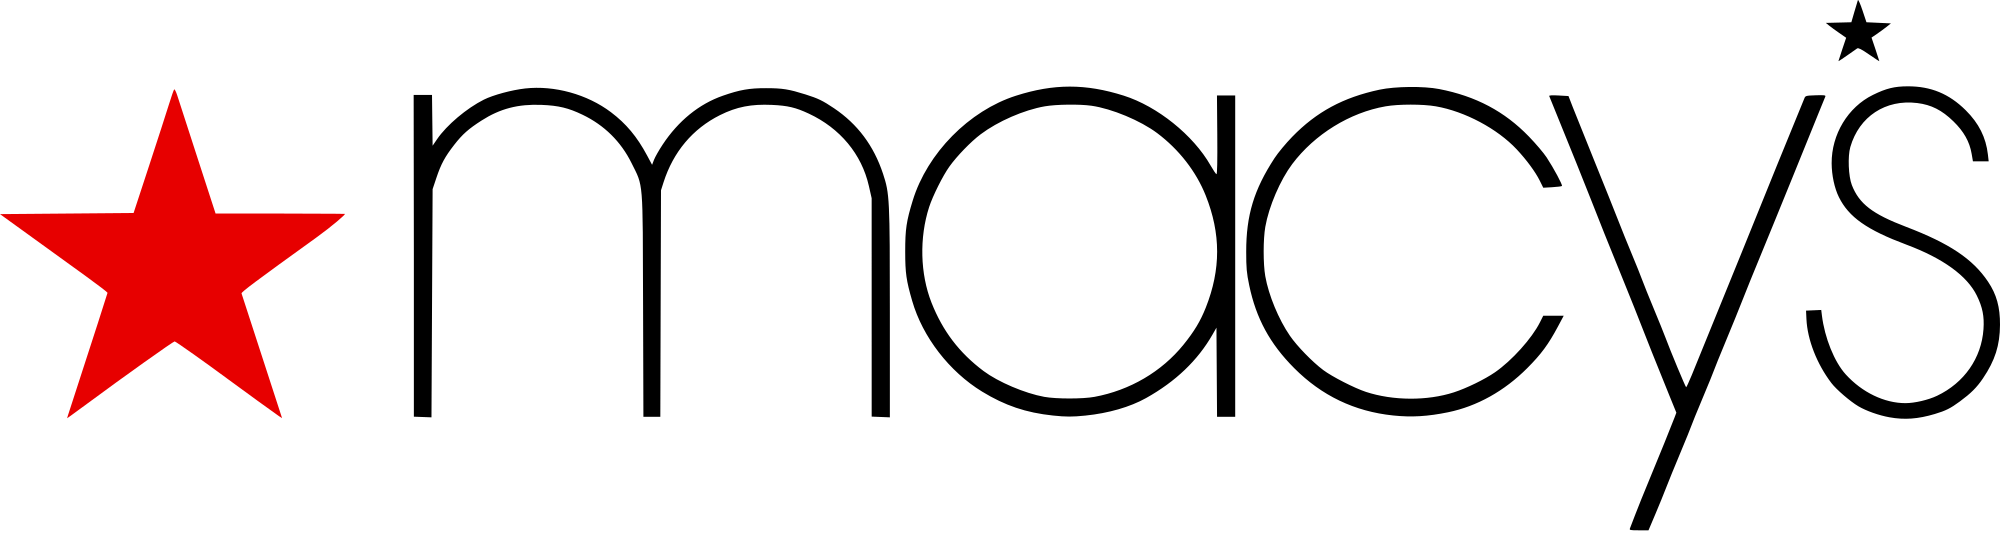 2000px-Macys_logo